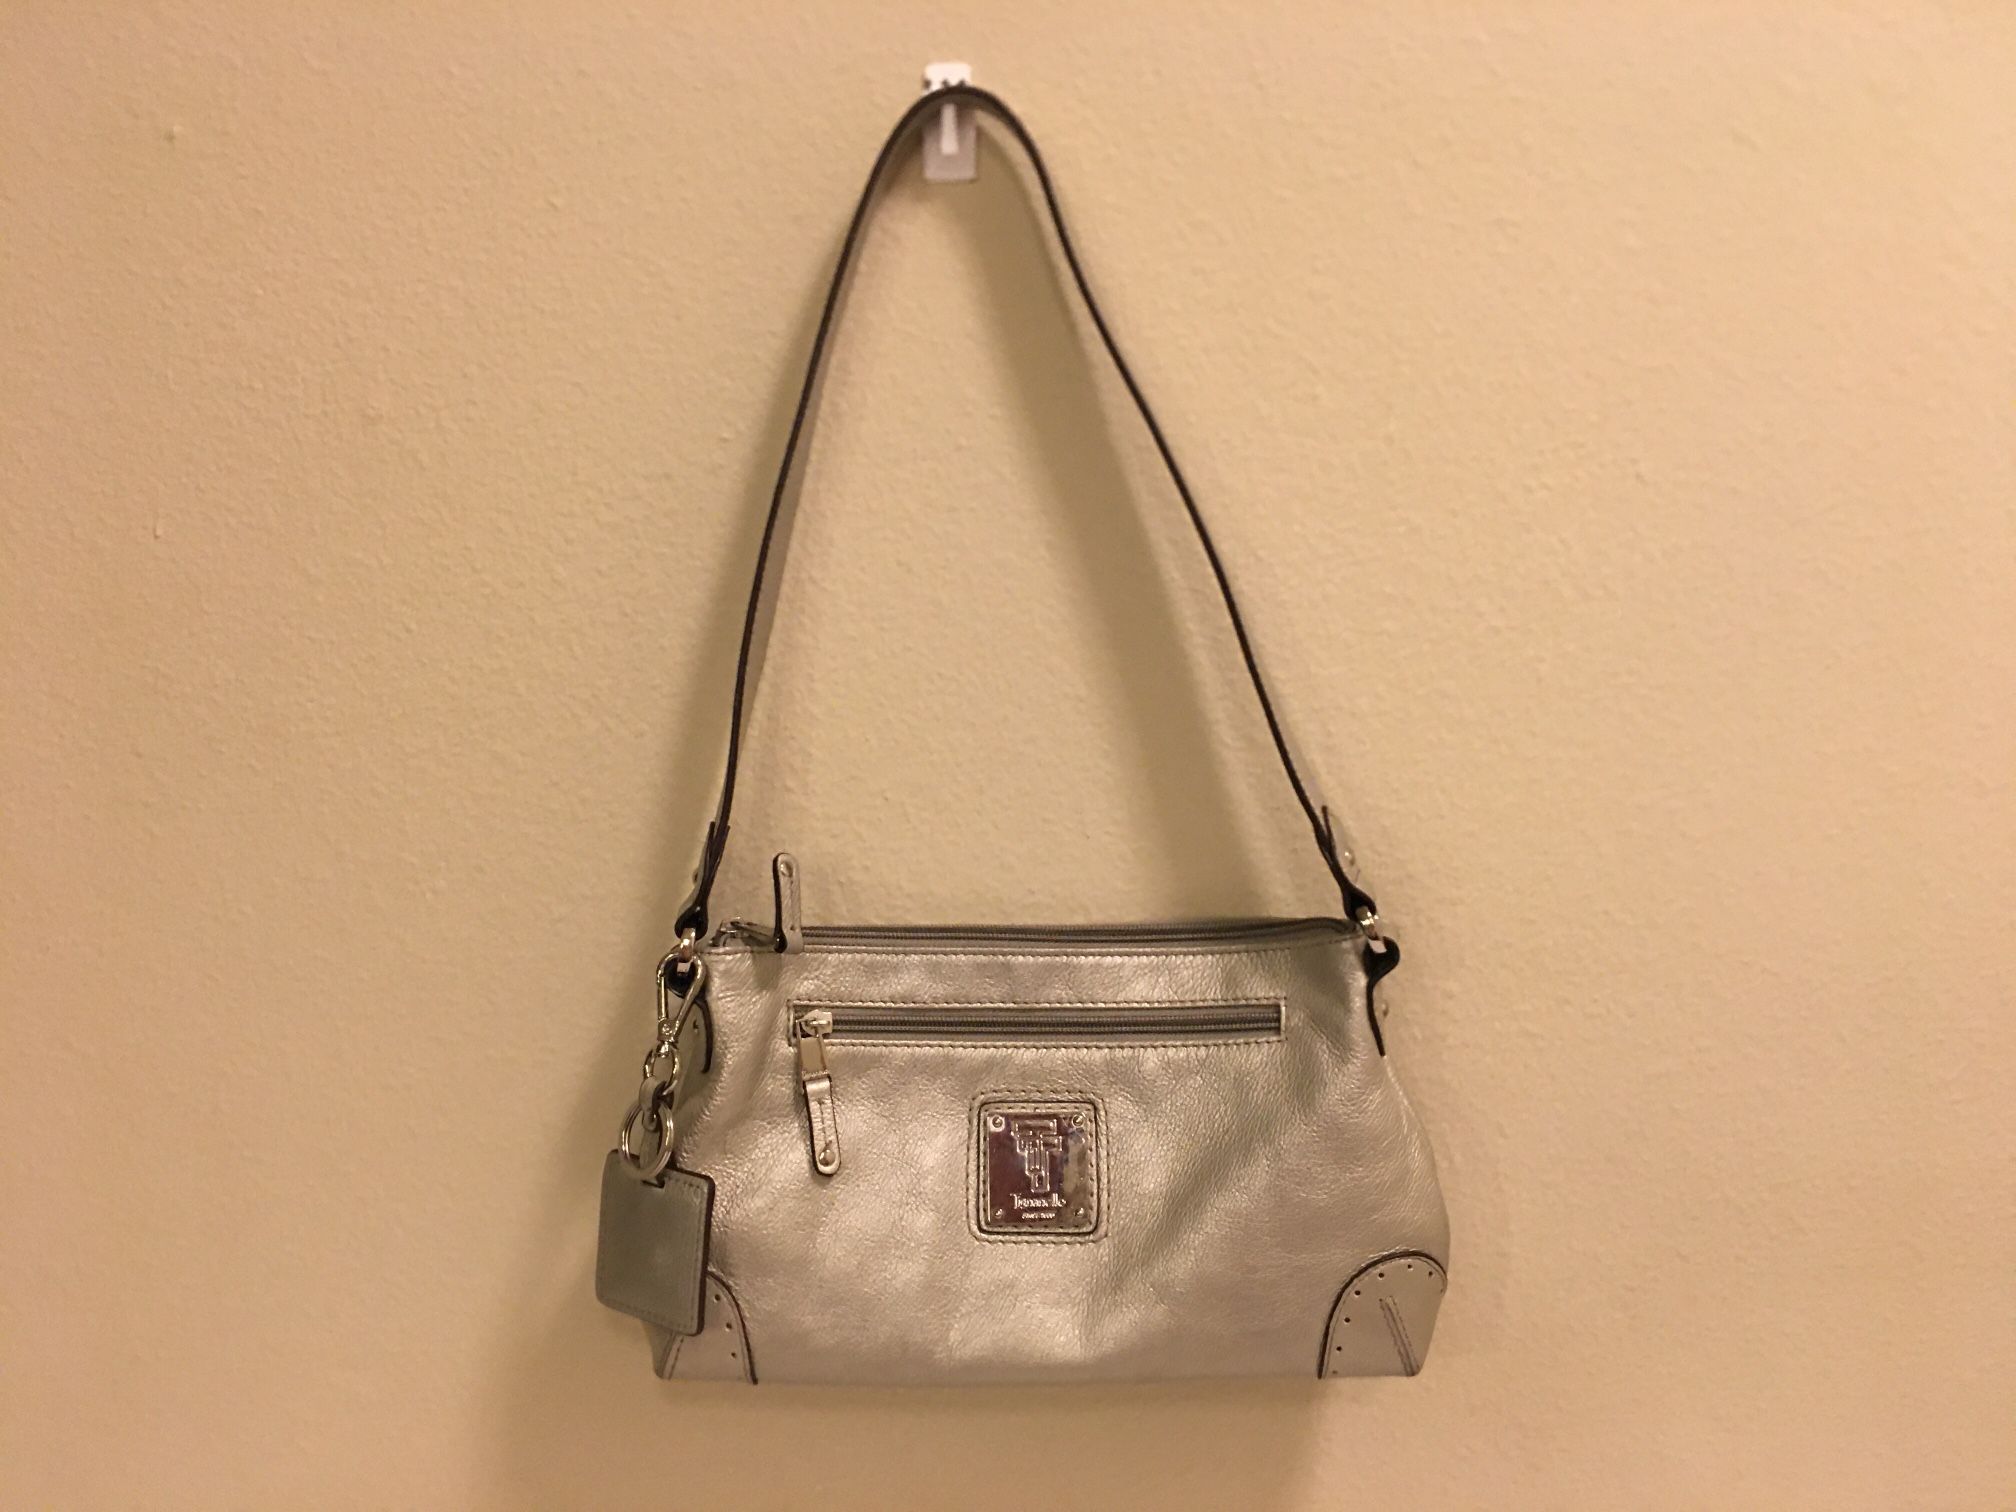 Tignanello Women’s Metallic Leather Shoulder  Bag Silver Handbag